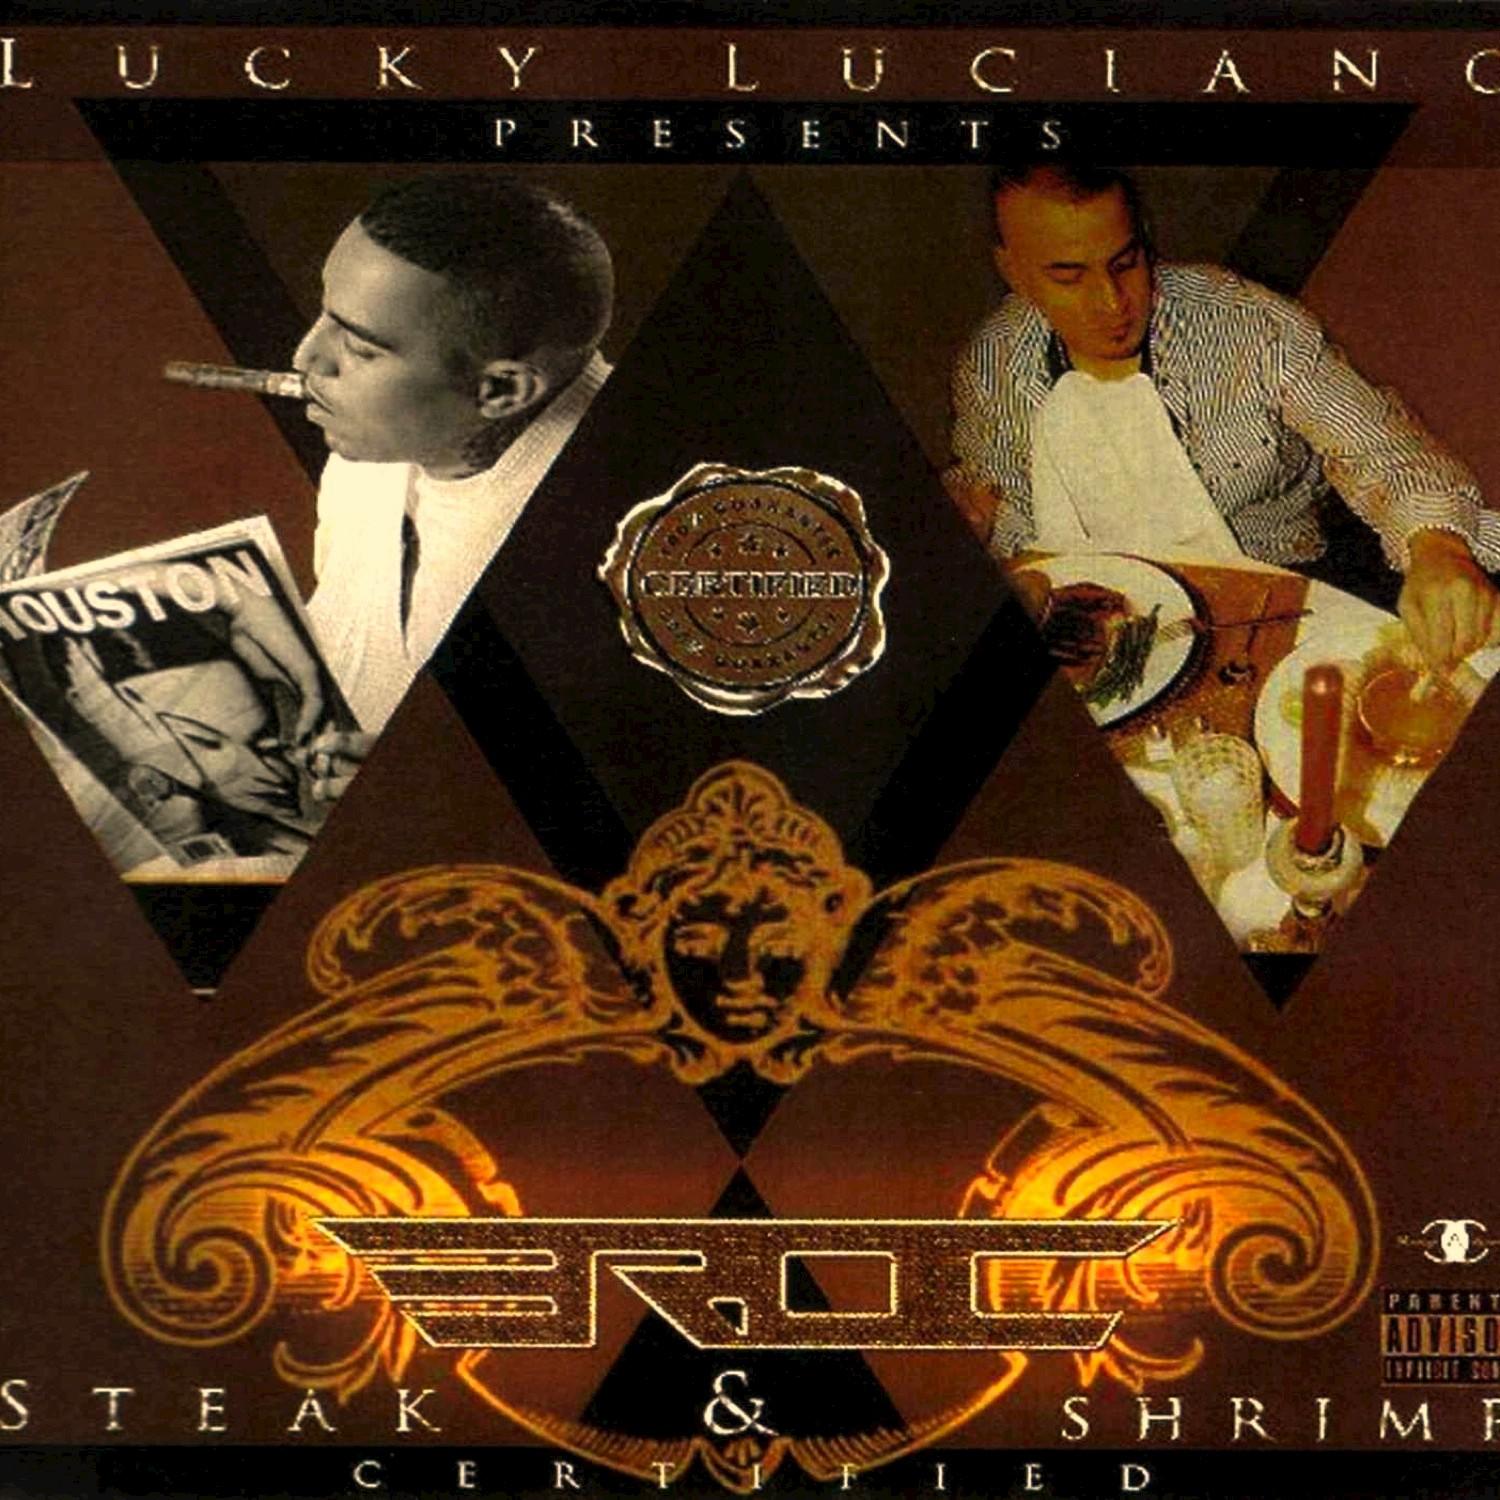 Lucky Luciano Presents Eroc Steak N Shrimp Certified